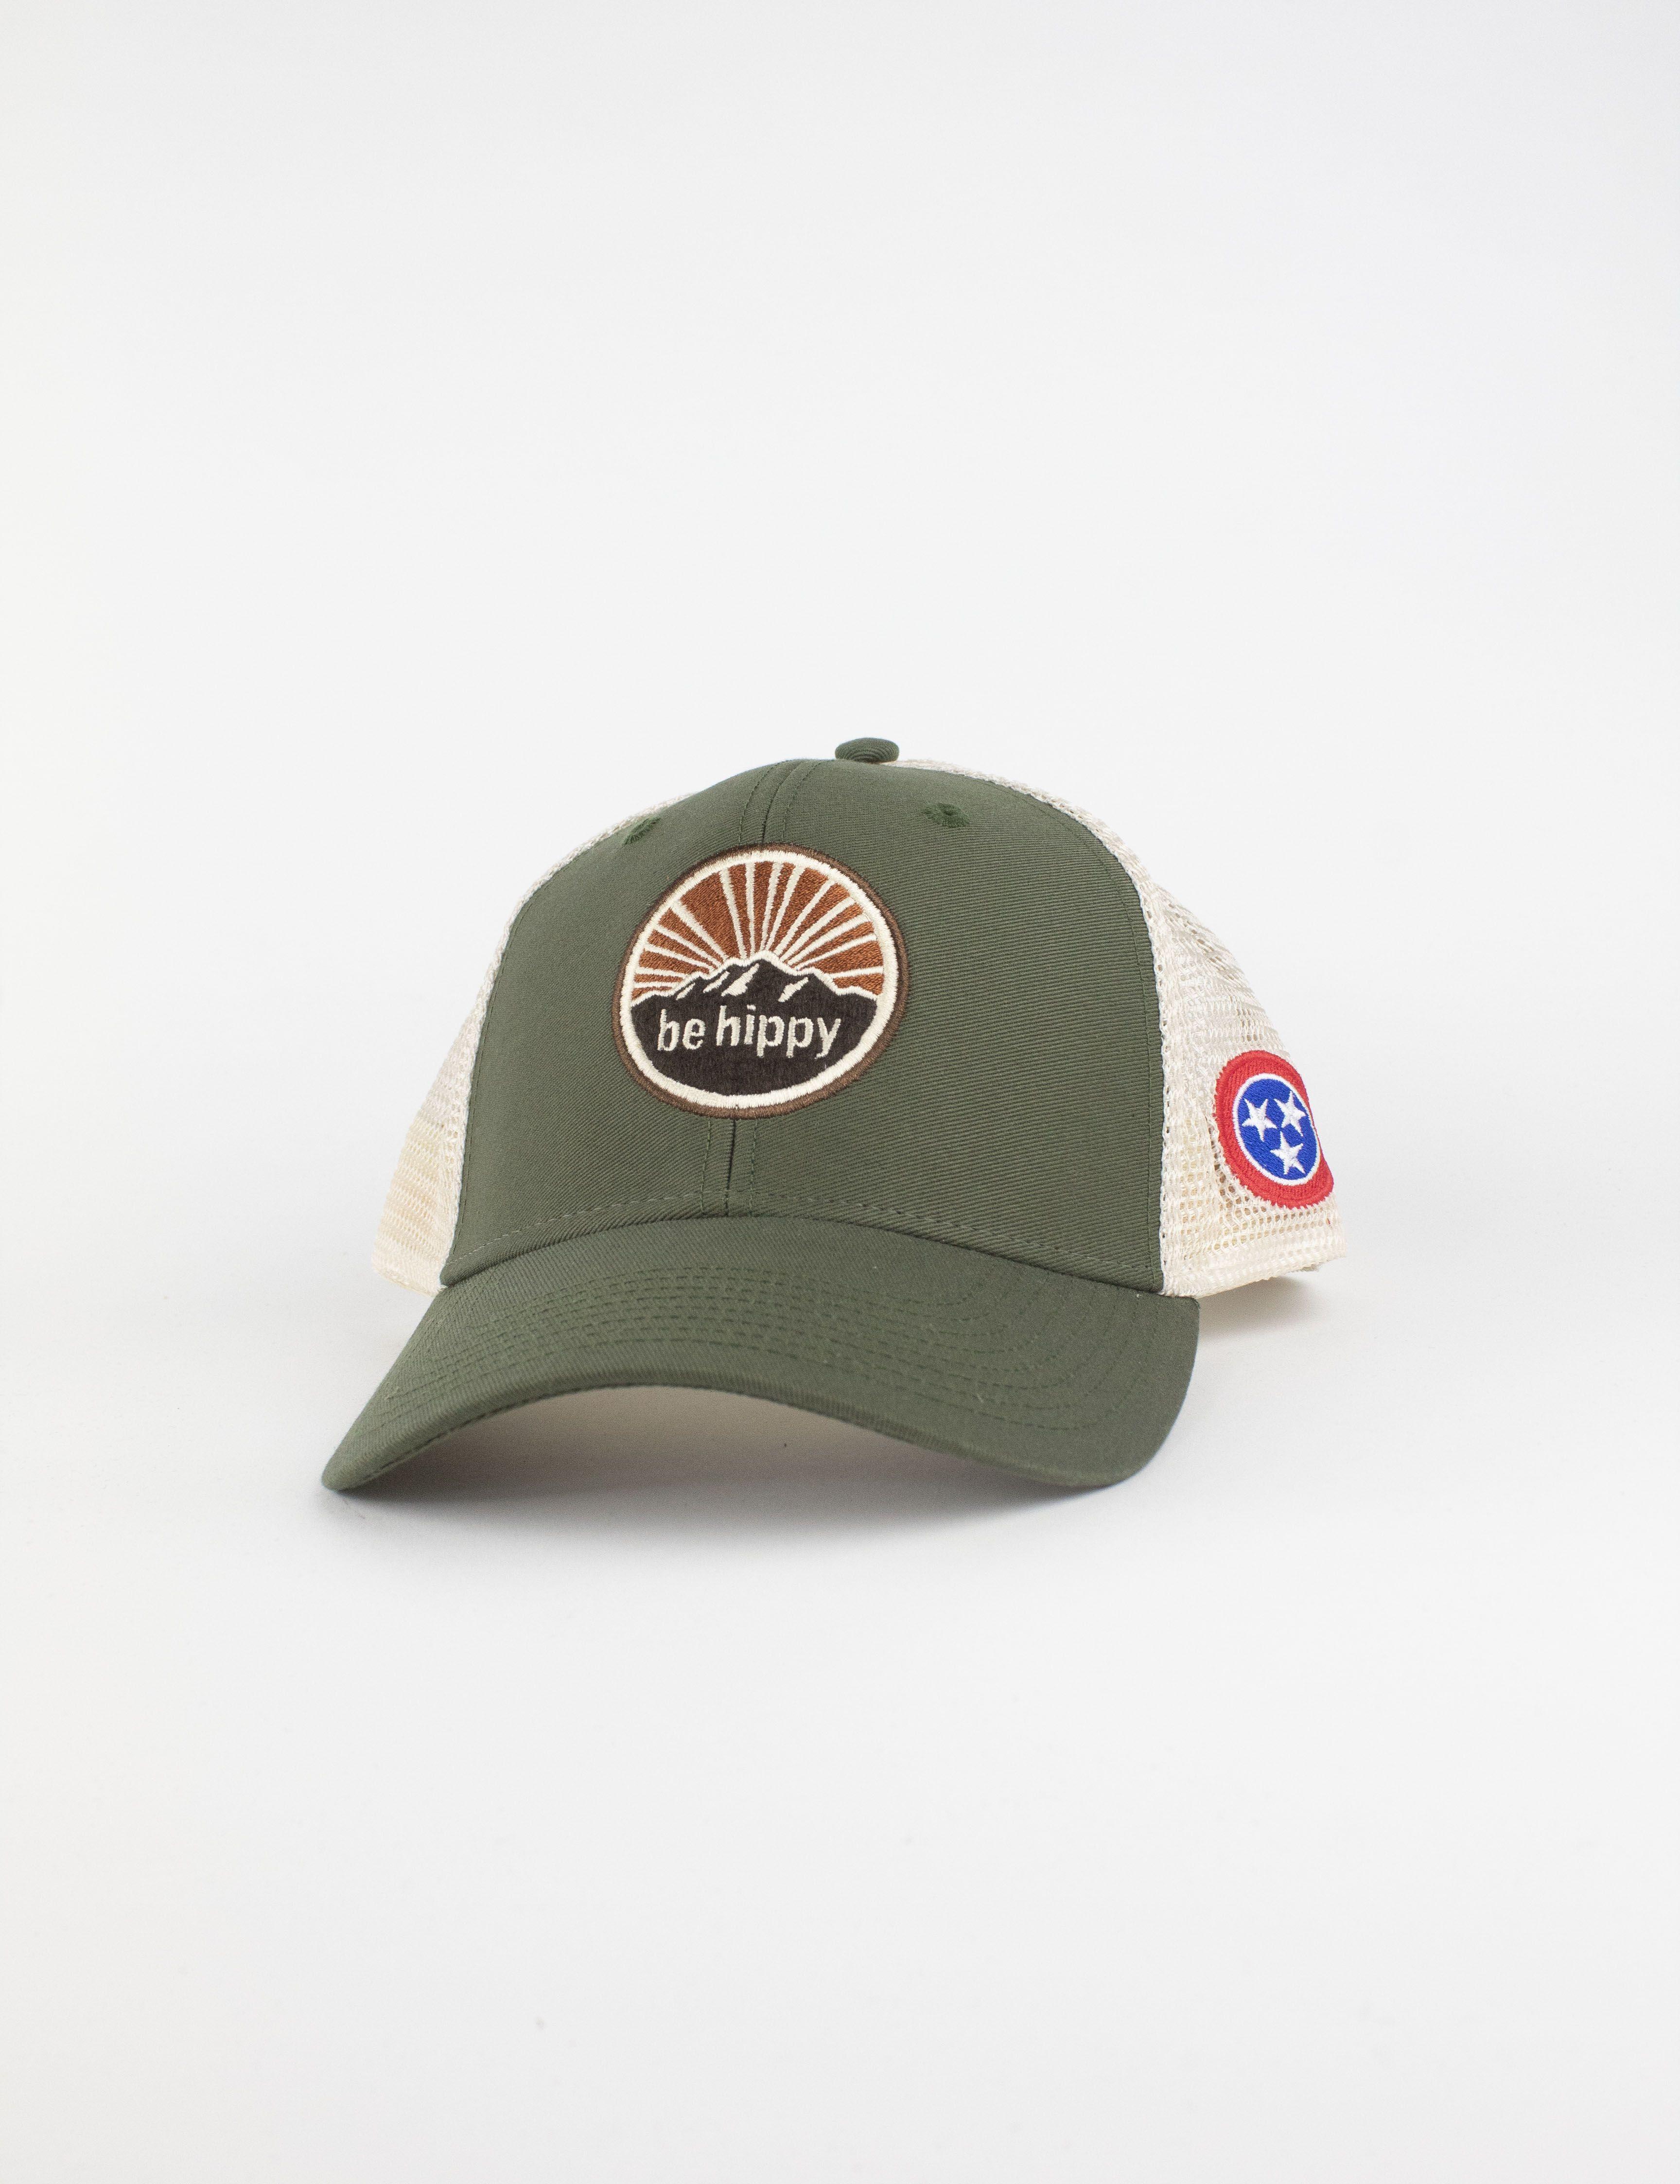 Tennessee Mountain Logo - mountain logo trucker hat